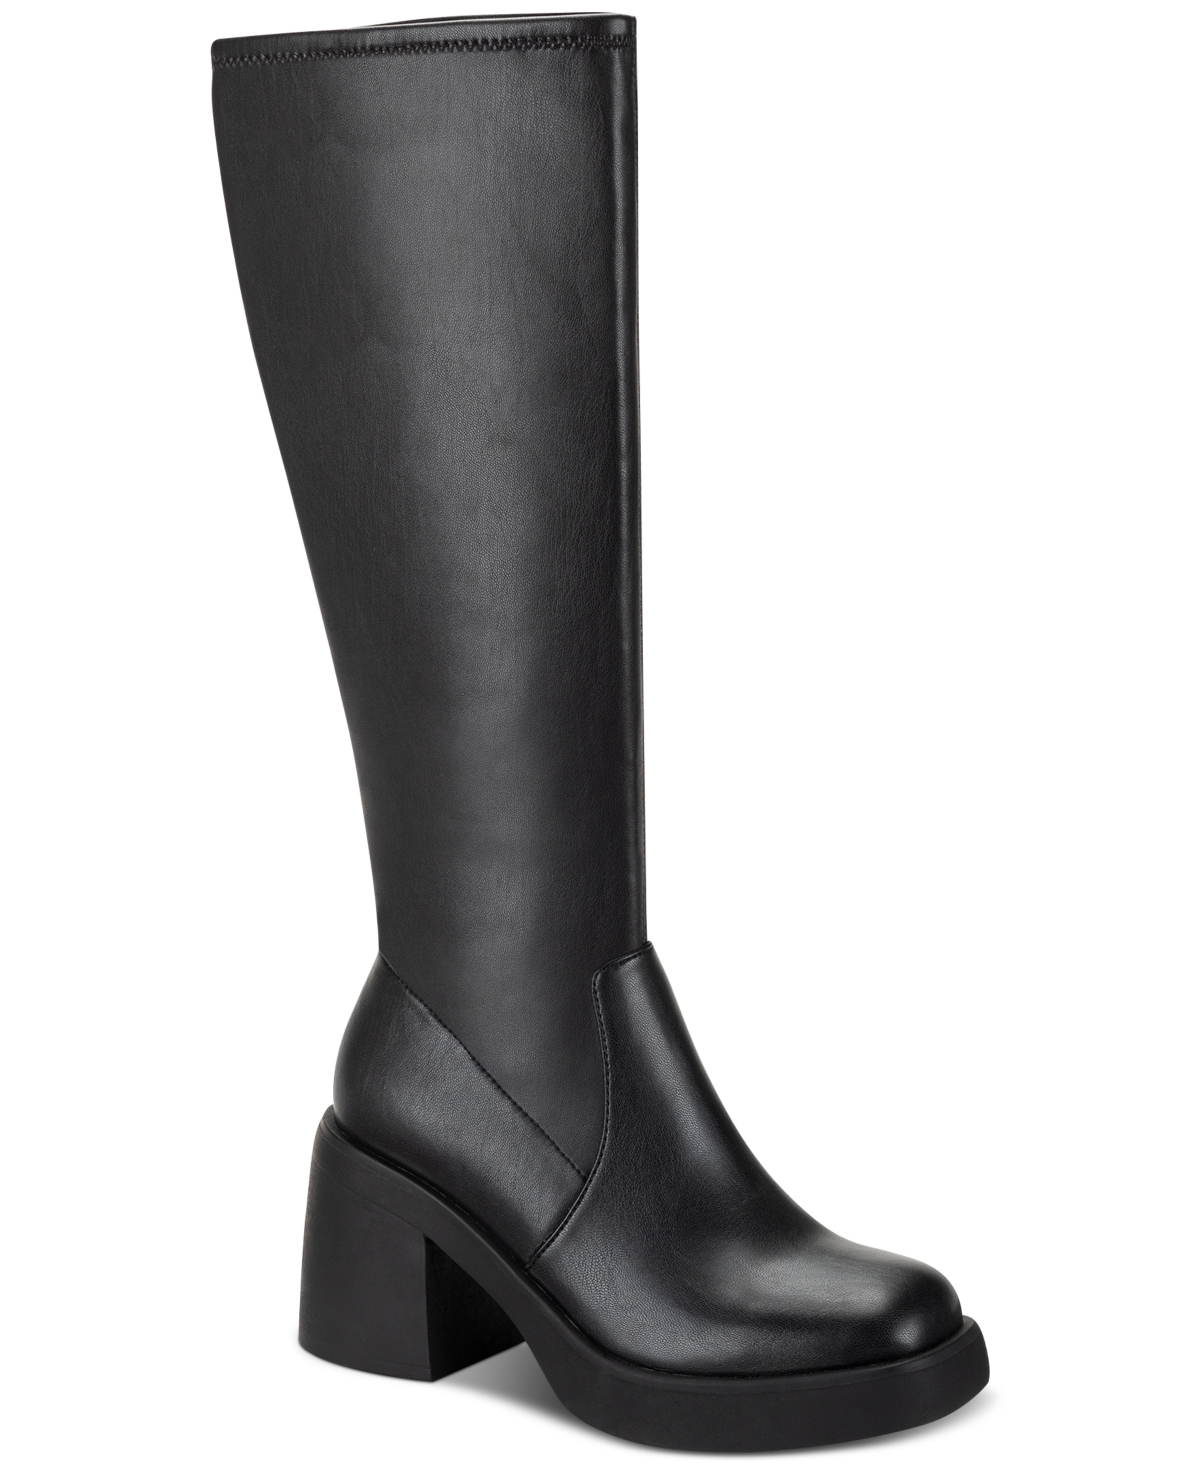 Tylaa Block-Heel Dress Boots, Created for Macy's - Black